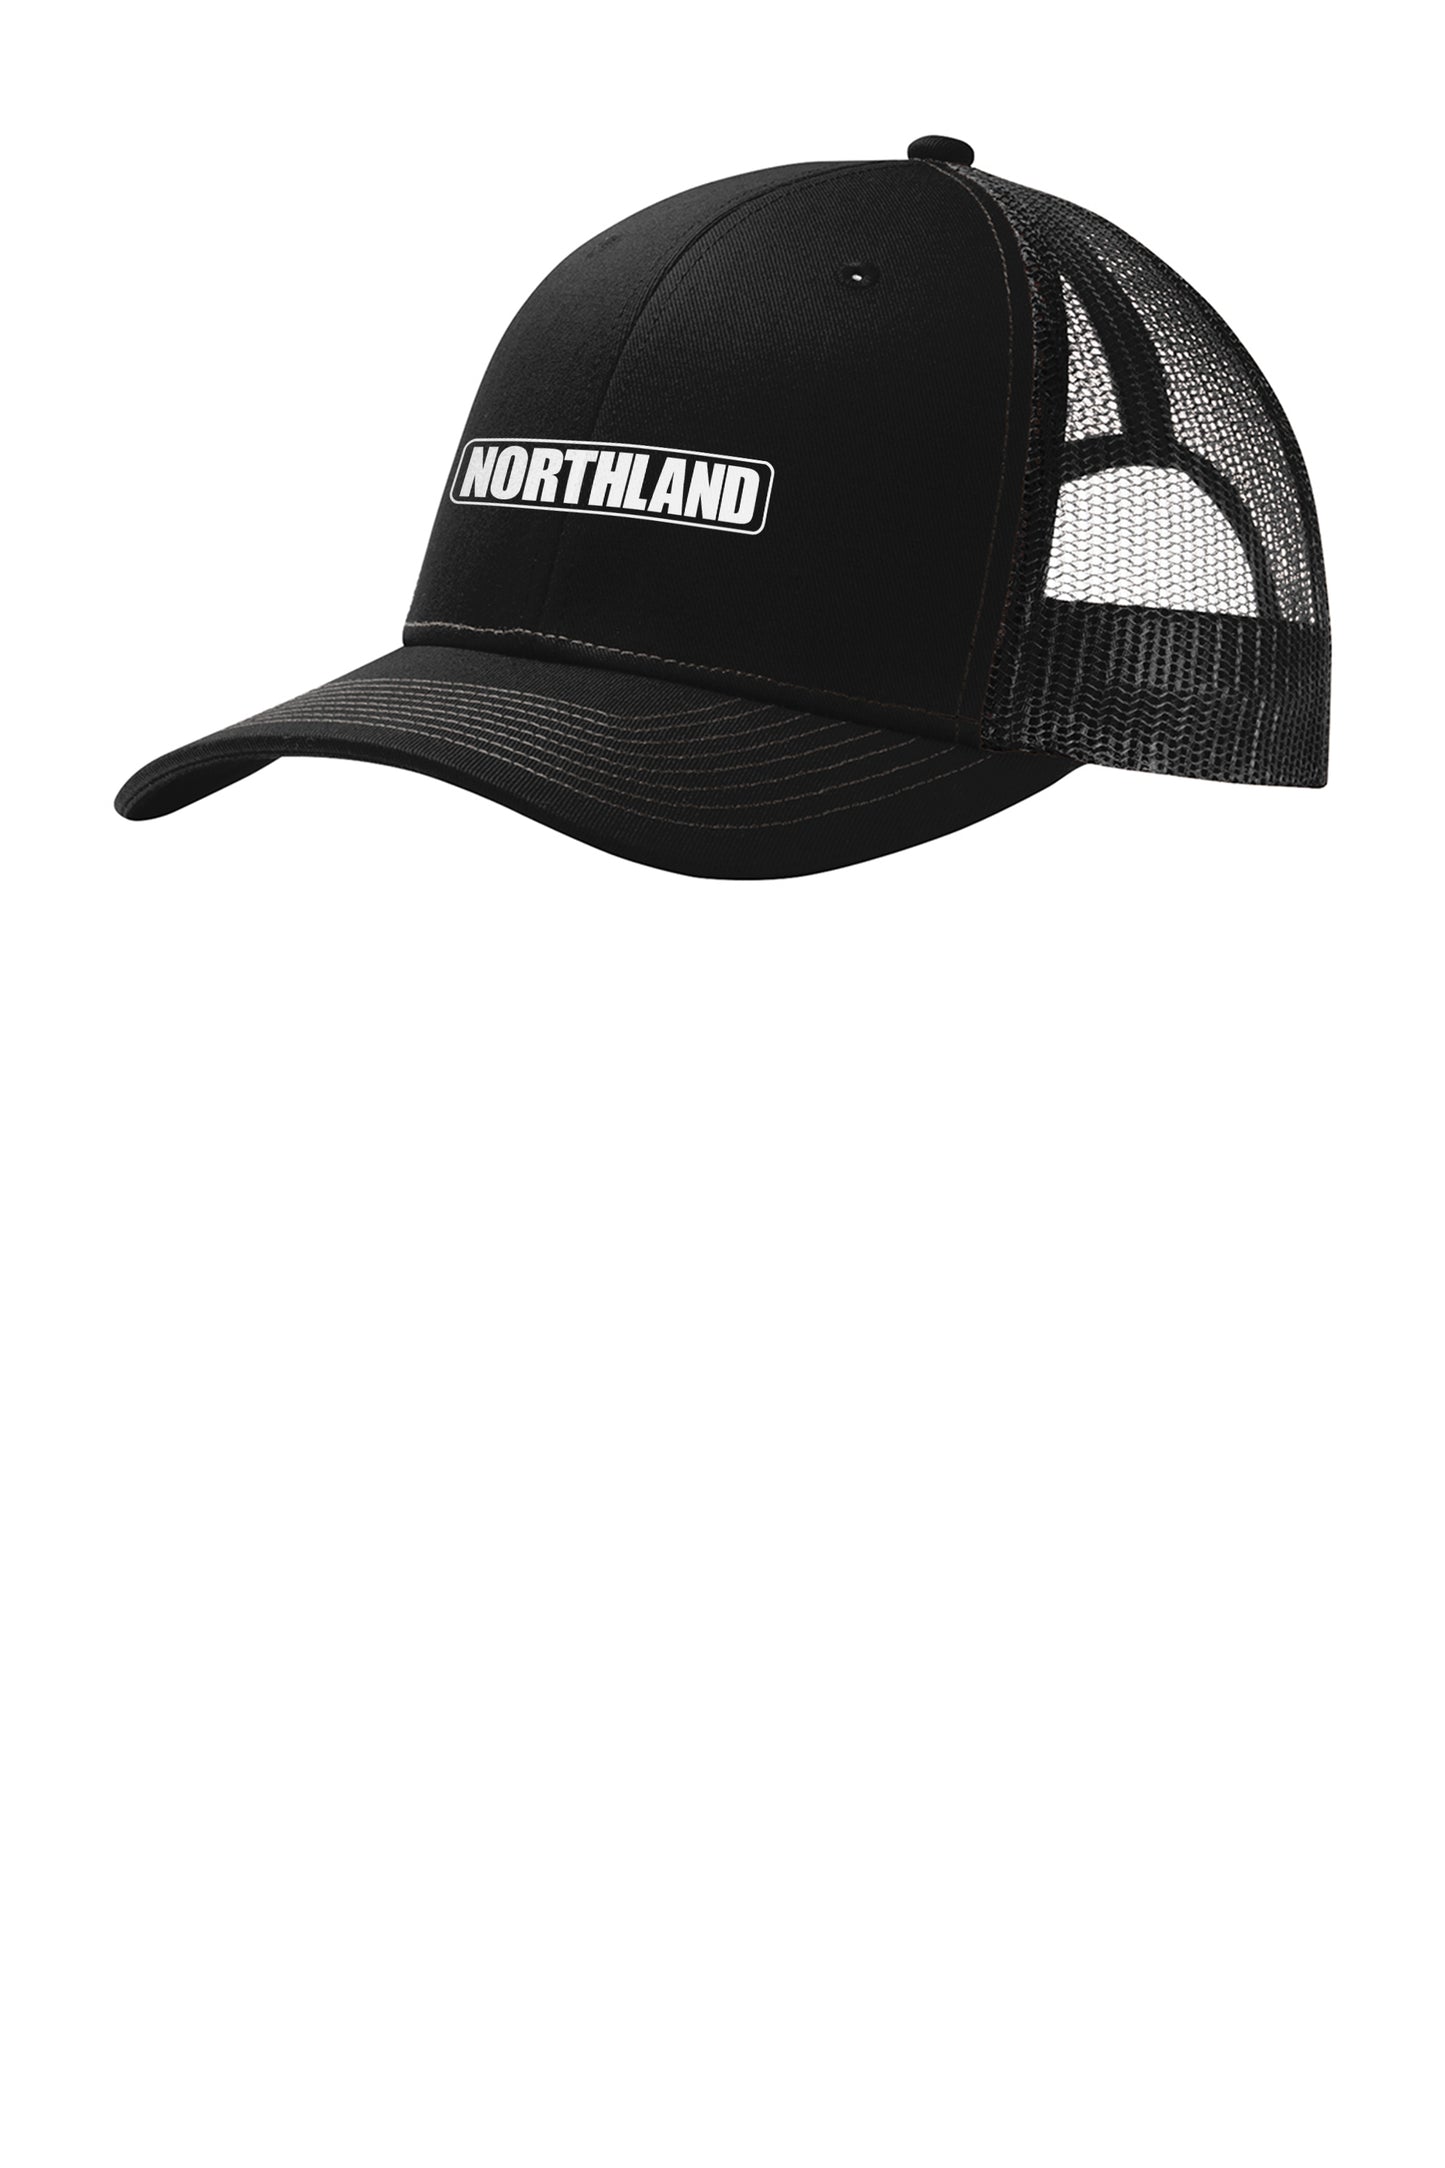 Northland Constructors Snapback Trucker Cap